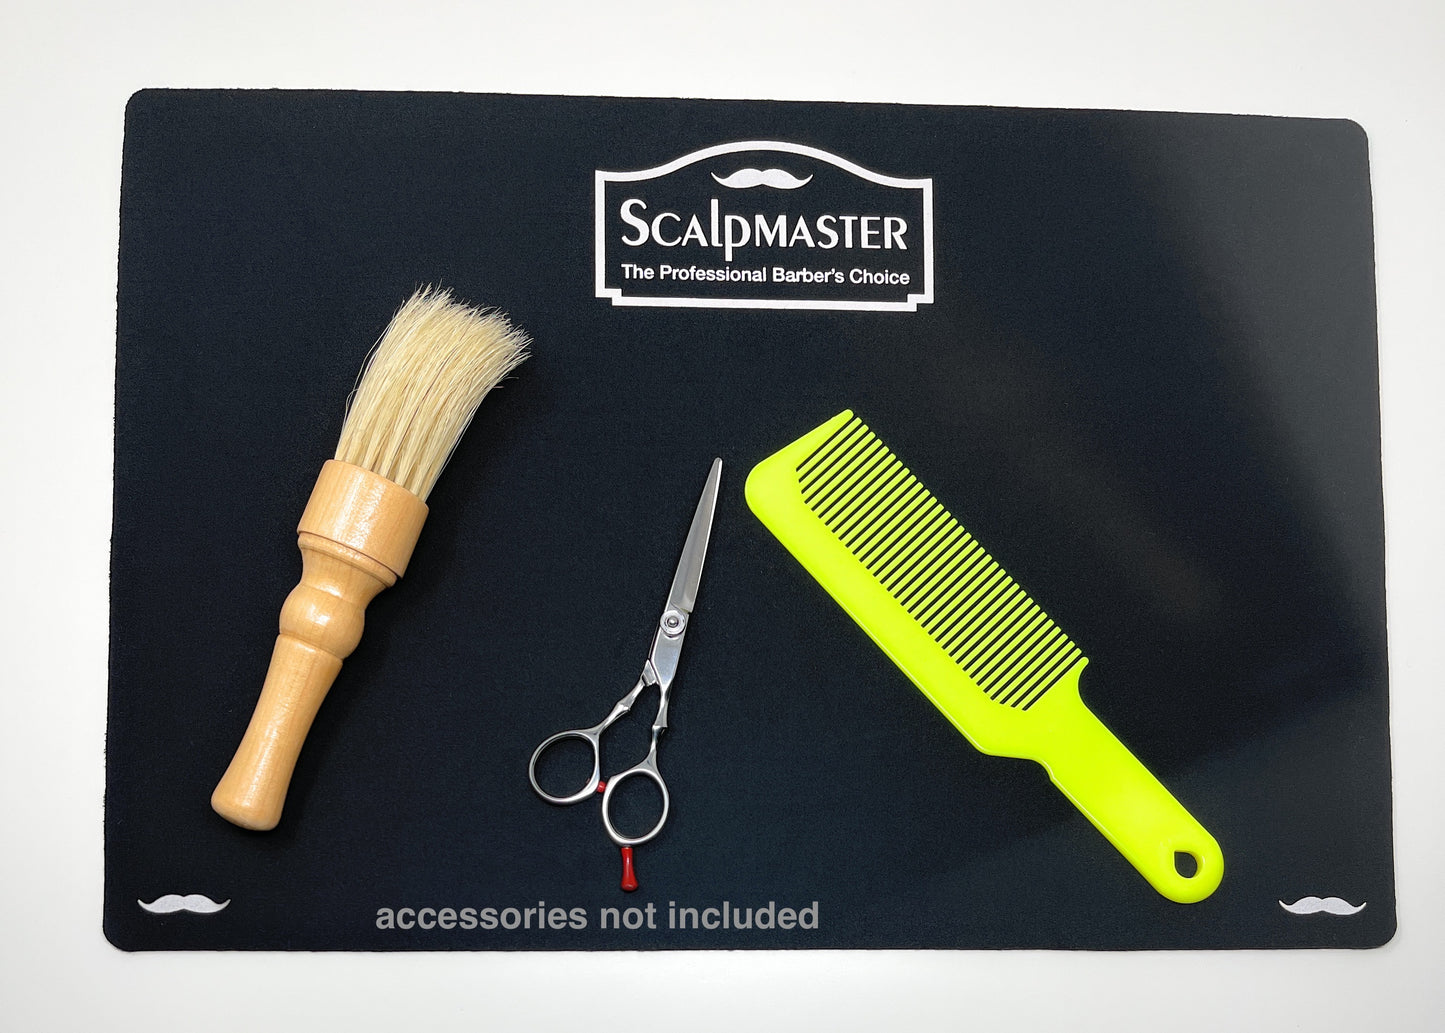 Scalpmaster Counter Backbar Pad Black Barber Mat For Clippers Anti-Slip Flexible Rubber For Stations Scissors Salon Tools Countertop Black 1 Pc.